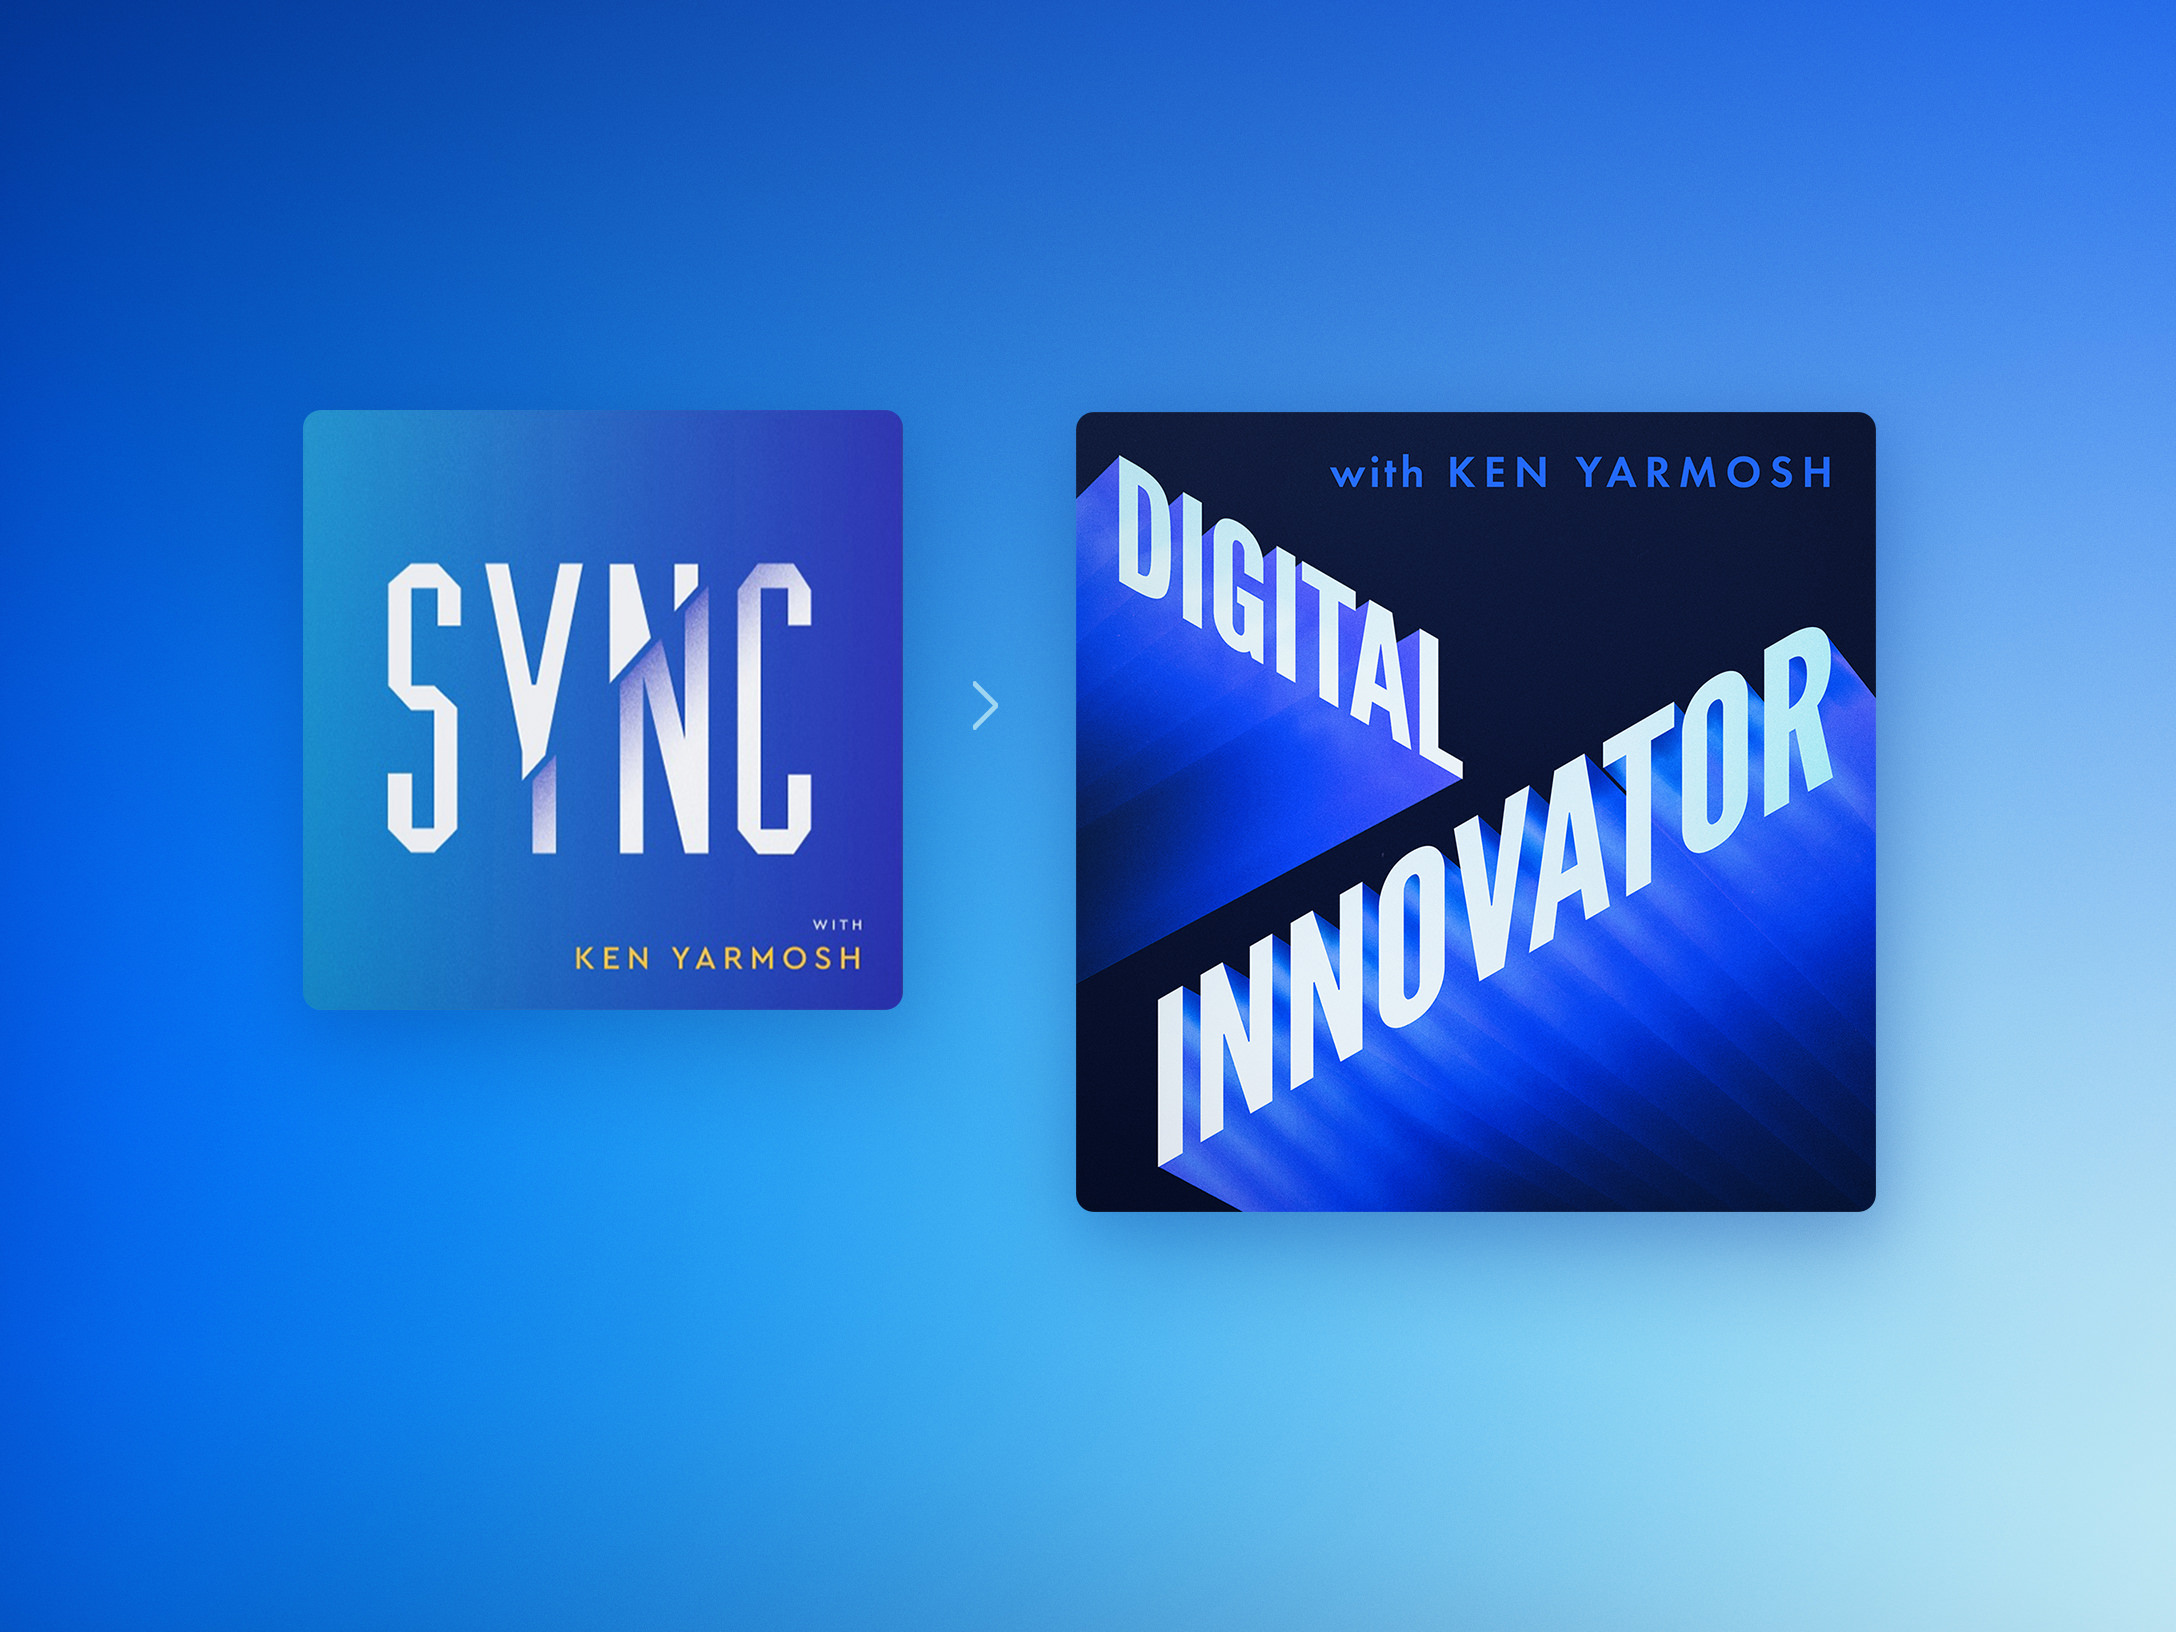 Digital Innovator Podcast Cover Rebrand